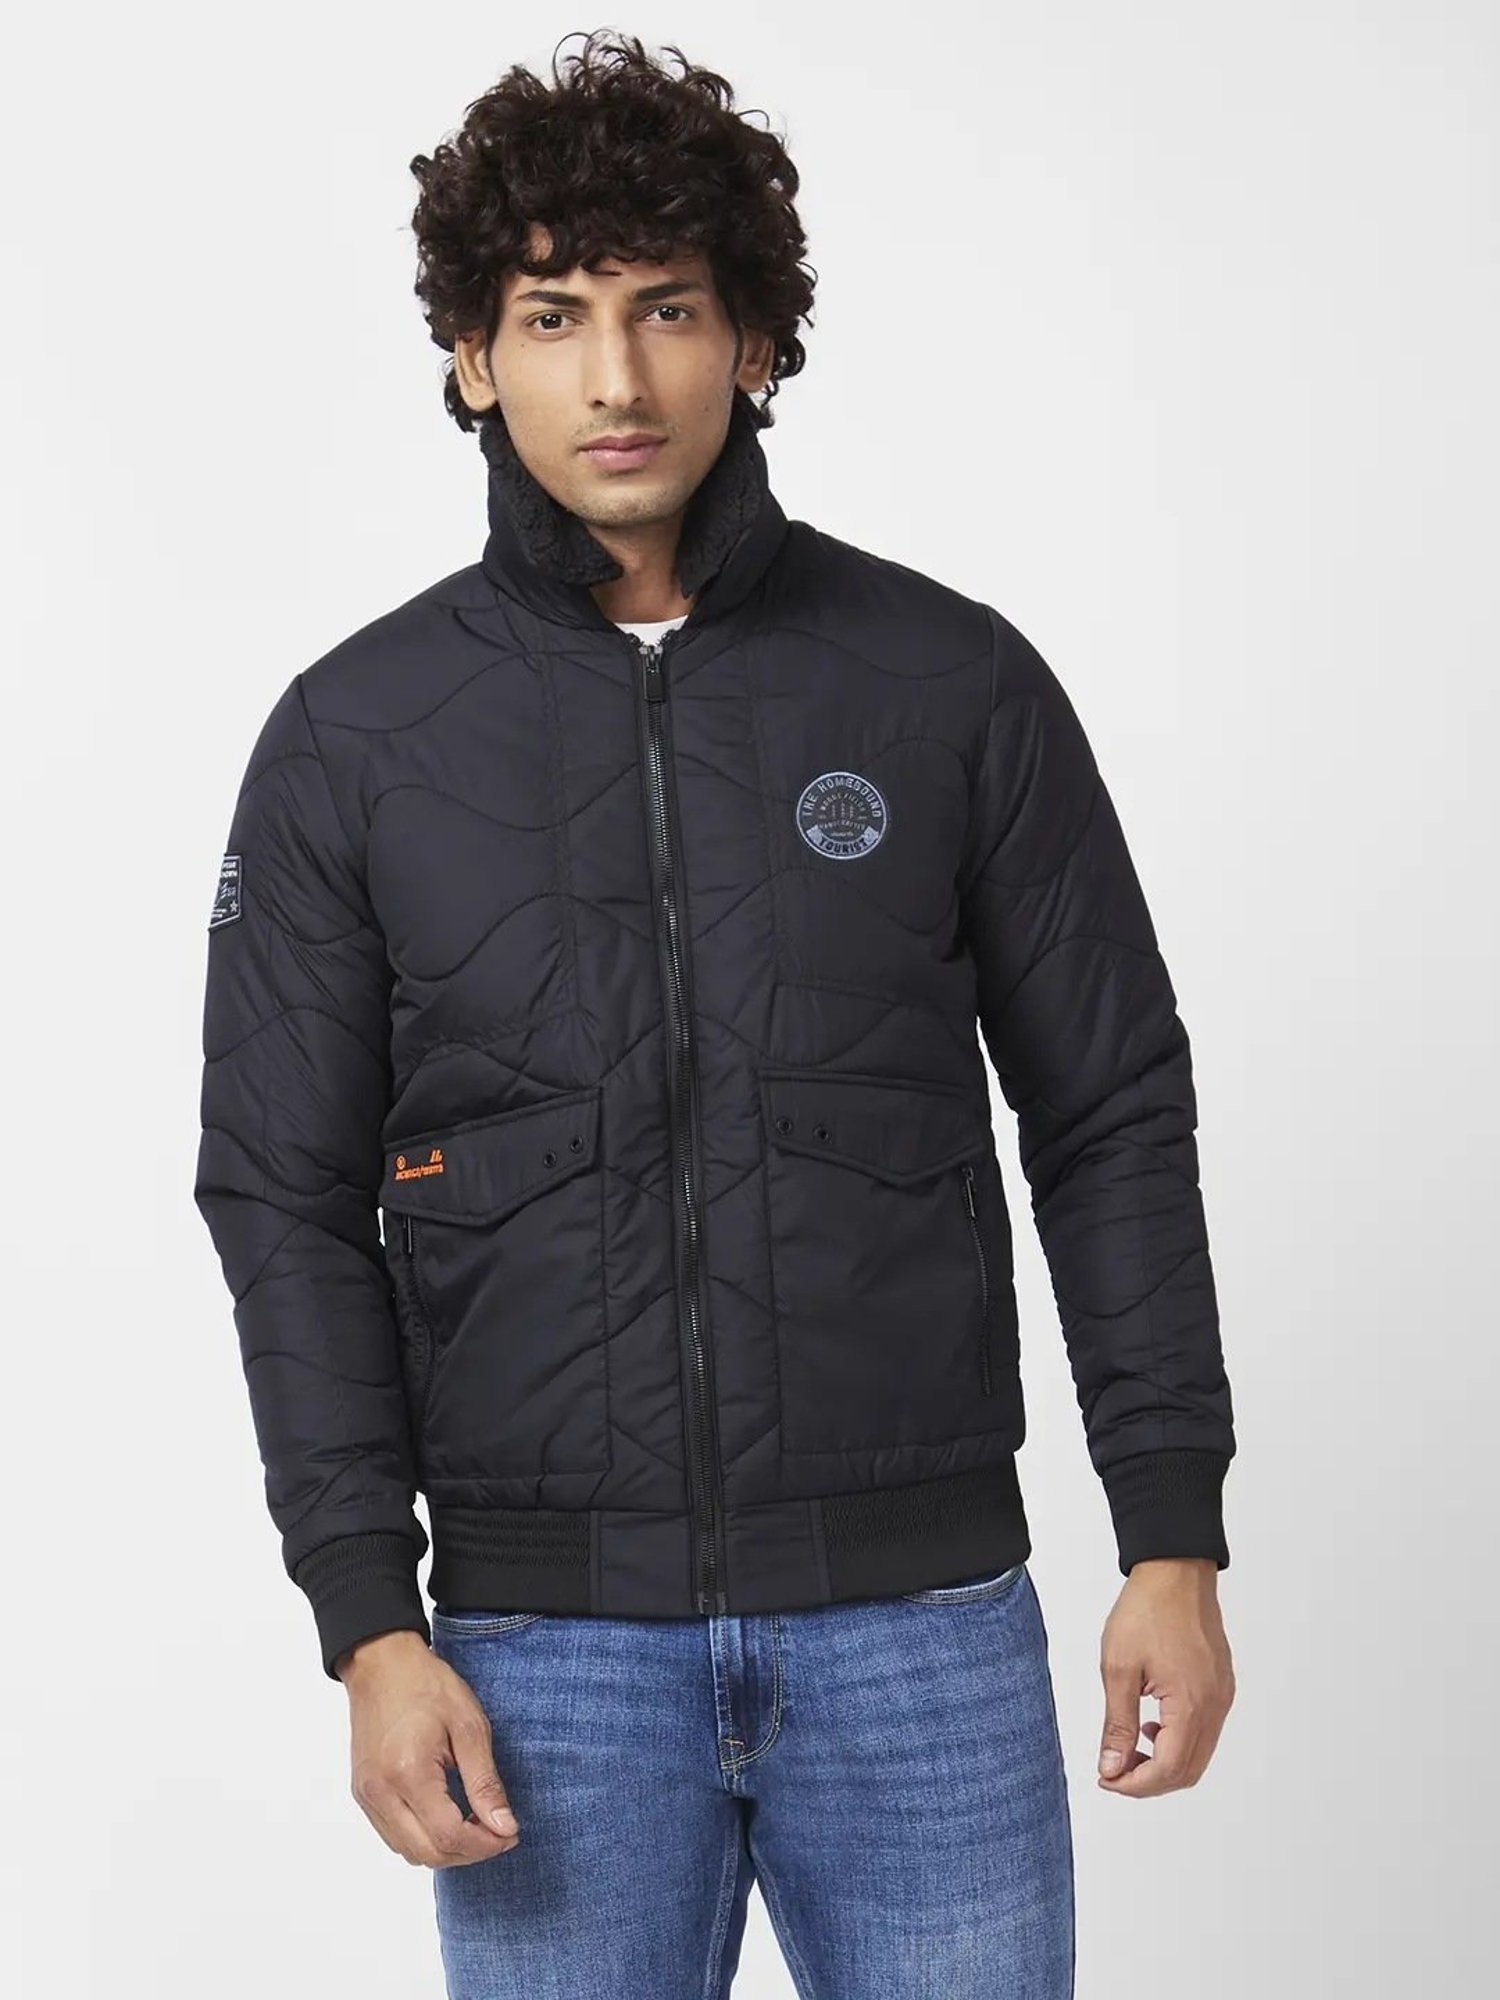 Buy Spykar Men High Neck Solid Full Sleeves Jacket - Black online